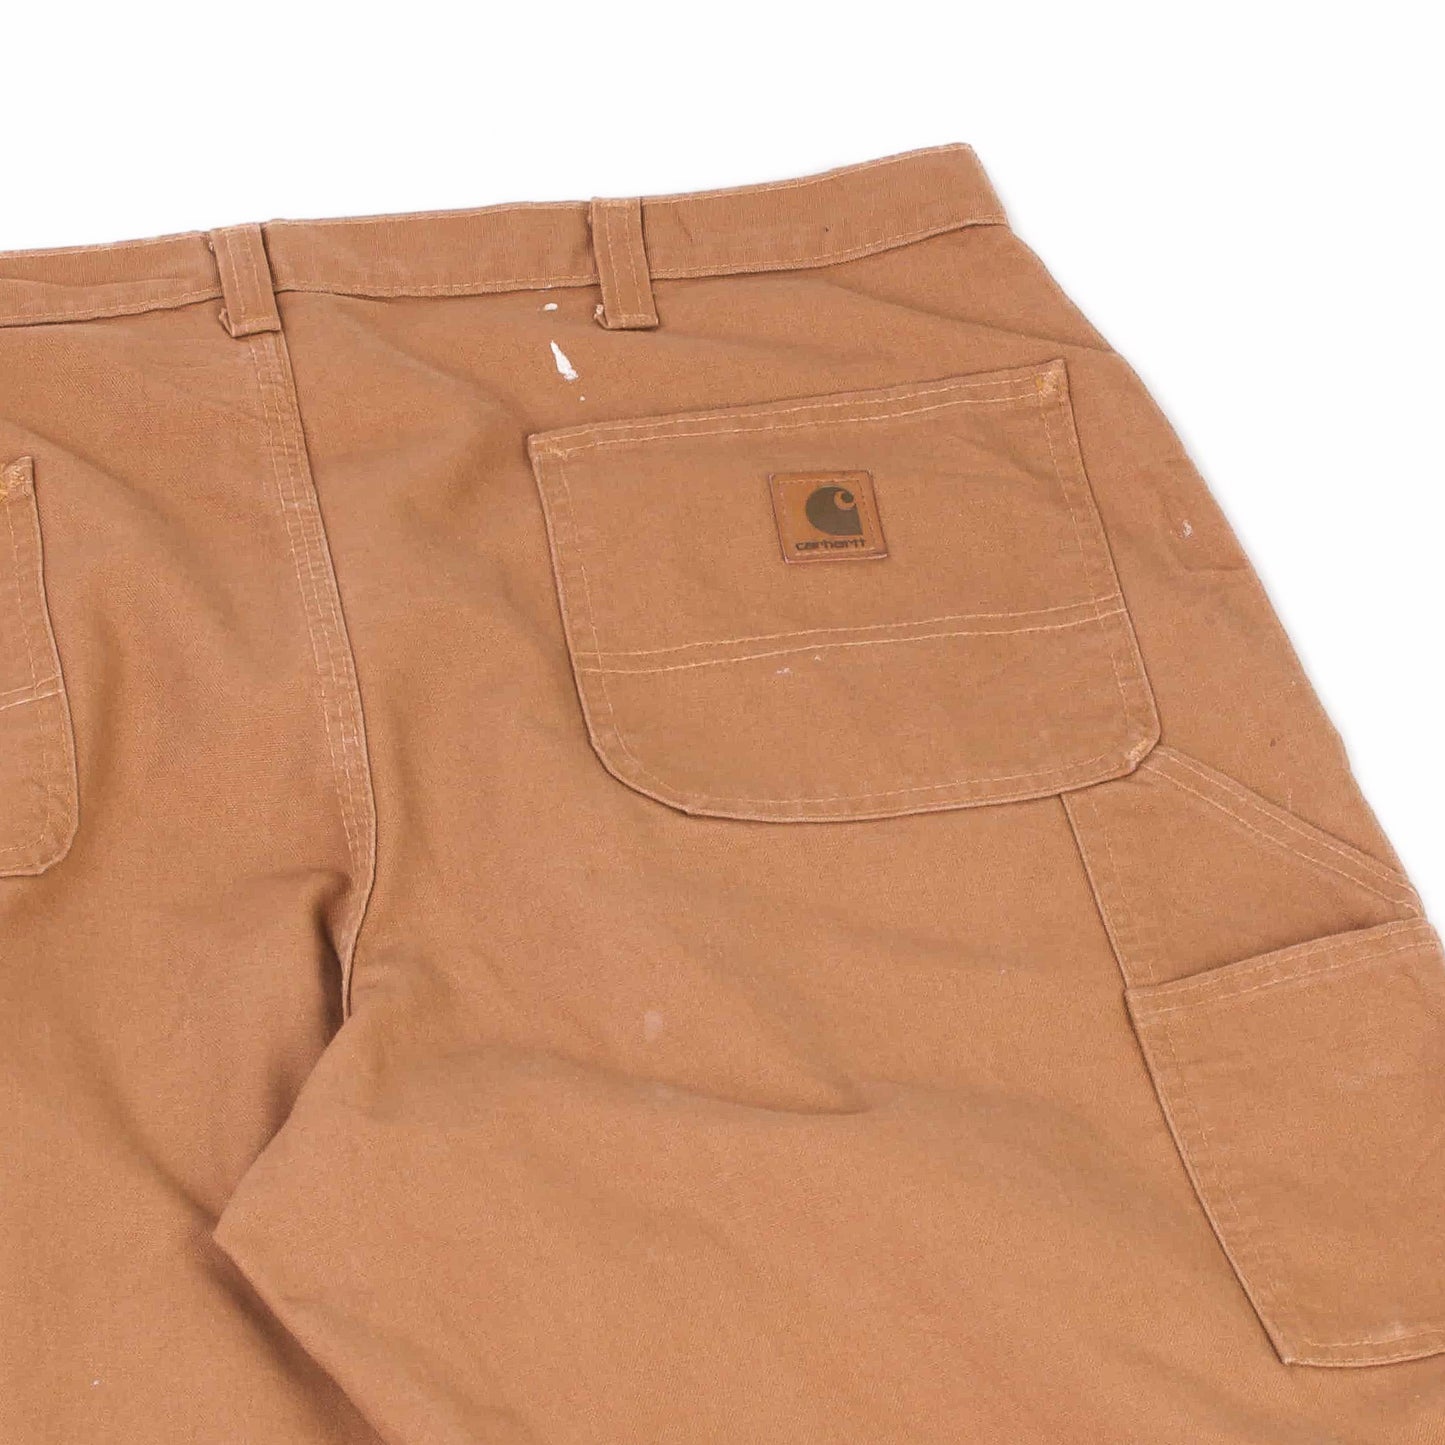 Vintage Carhartt Workwear Pants - Duck - 38x32 - American Madness